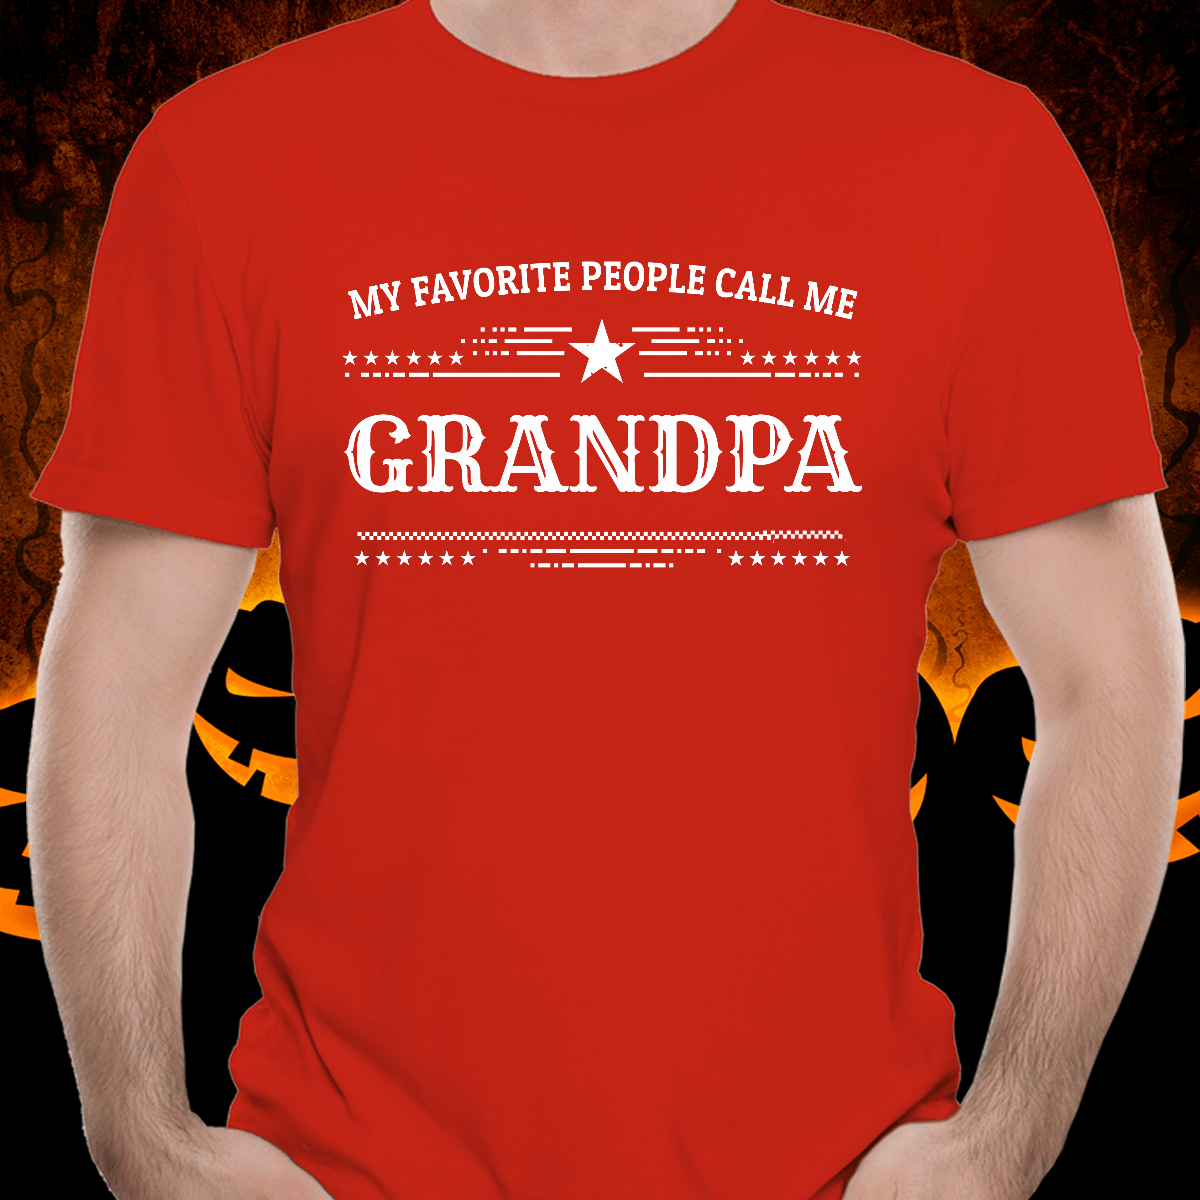 Grandpa Tee-Shirt